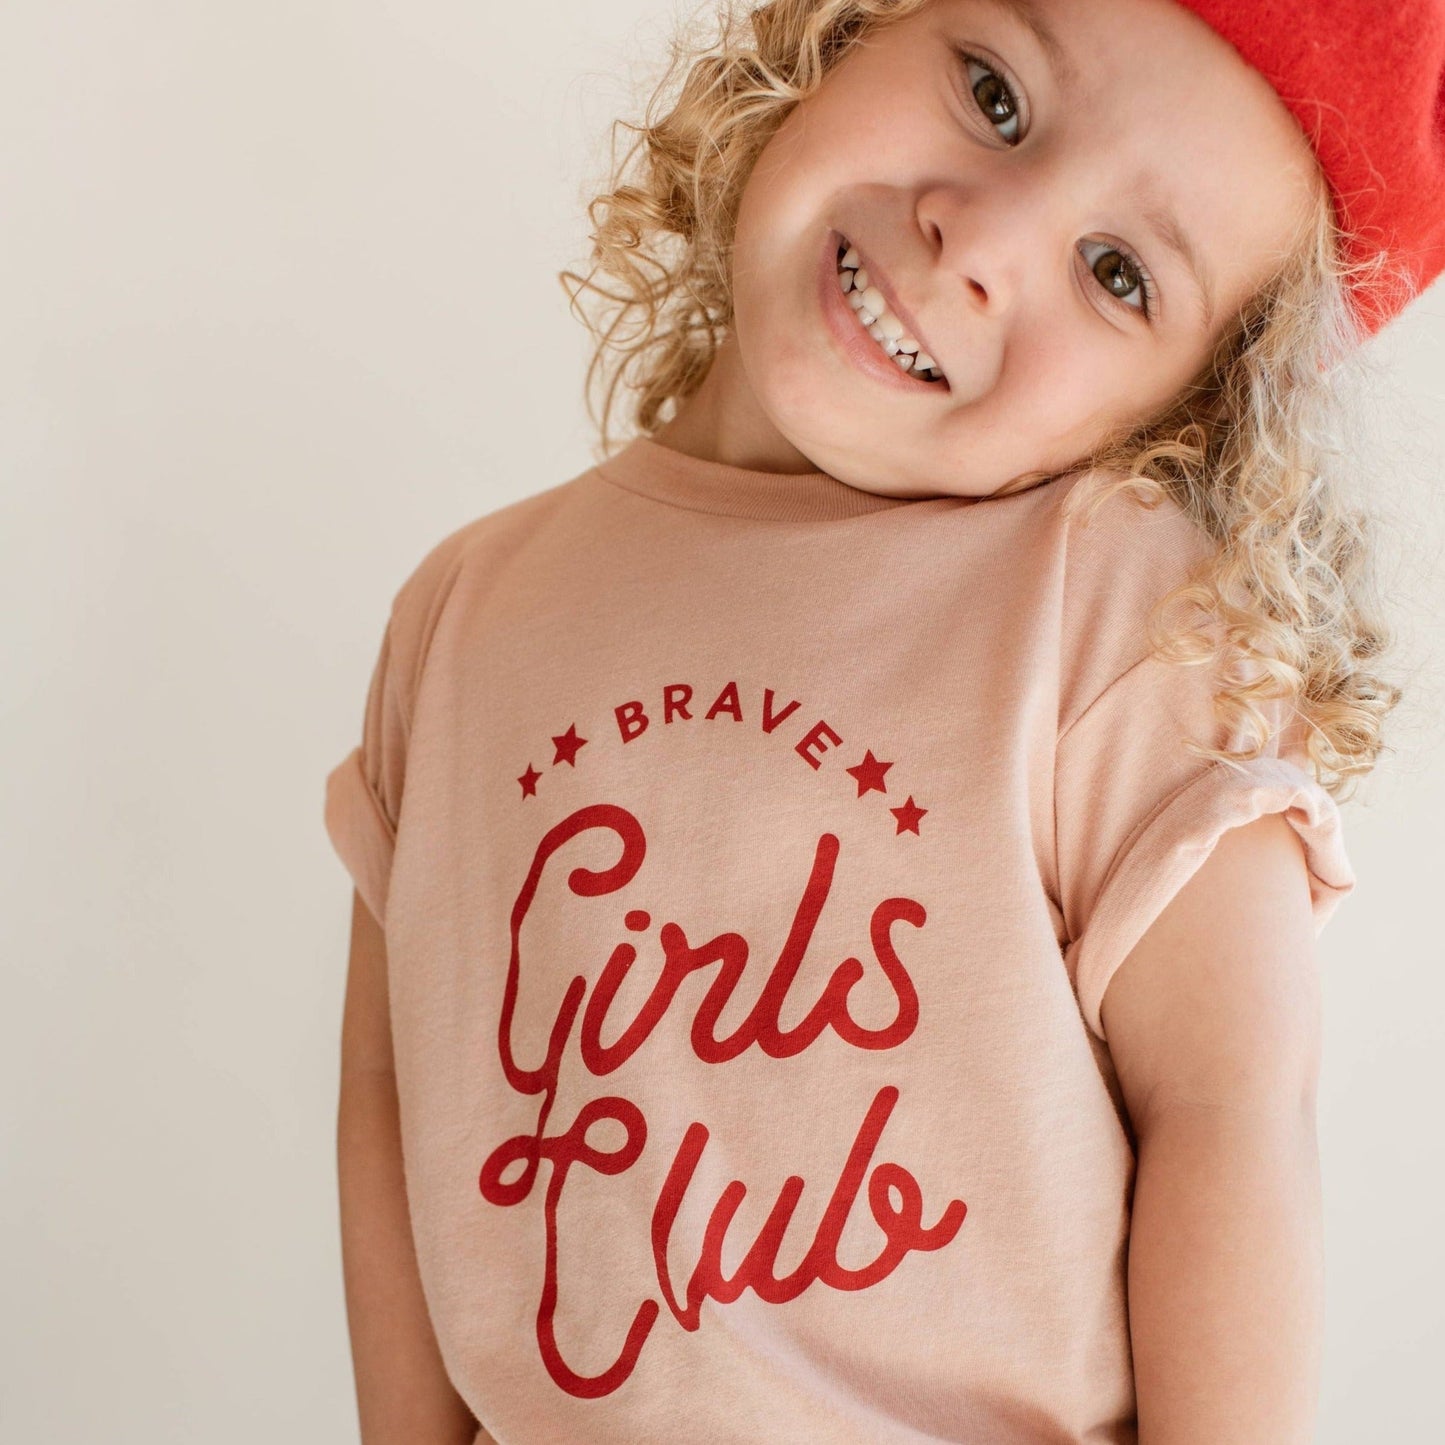 Brave Girls Club Kid's Tee